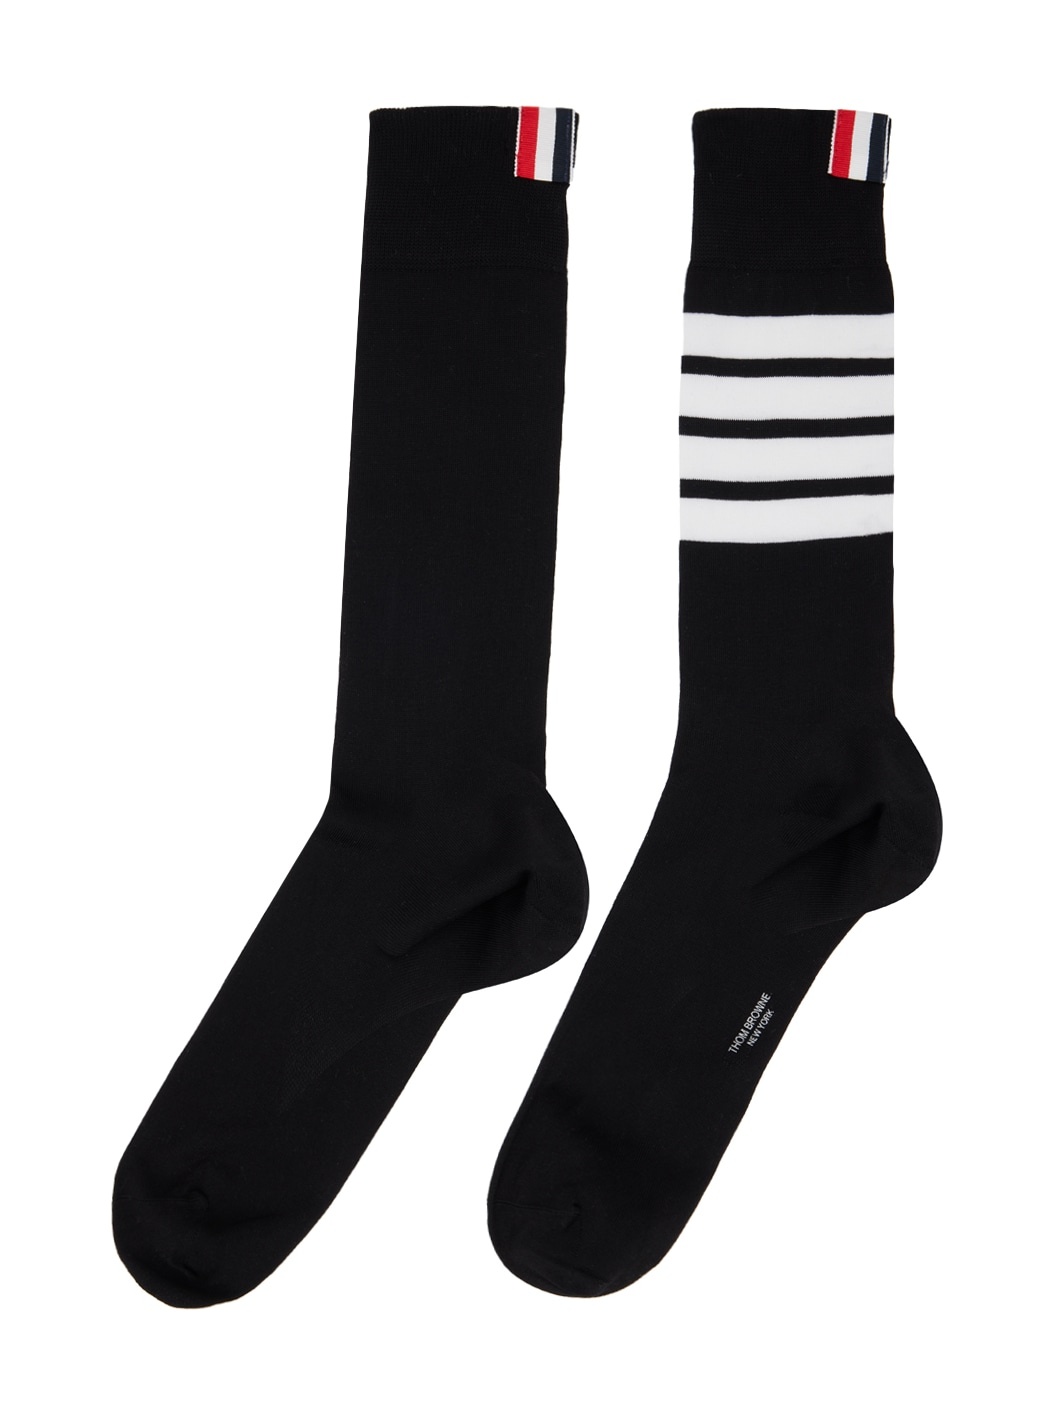 Black 4-Bar Stripe Socks - 2